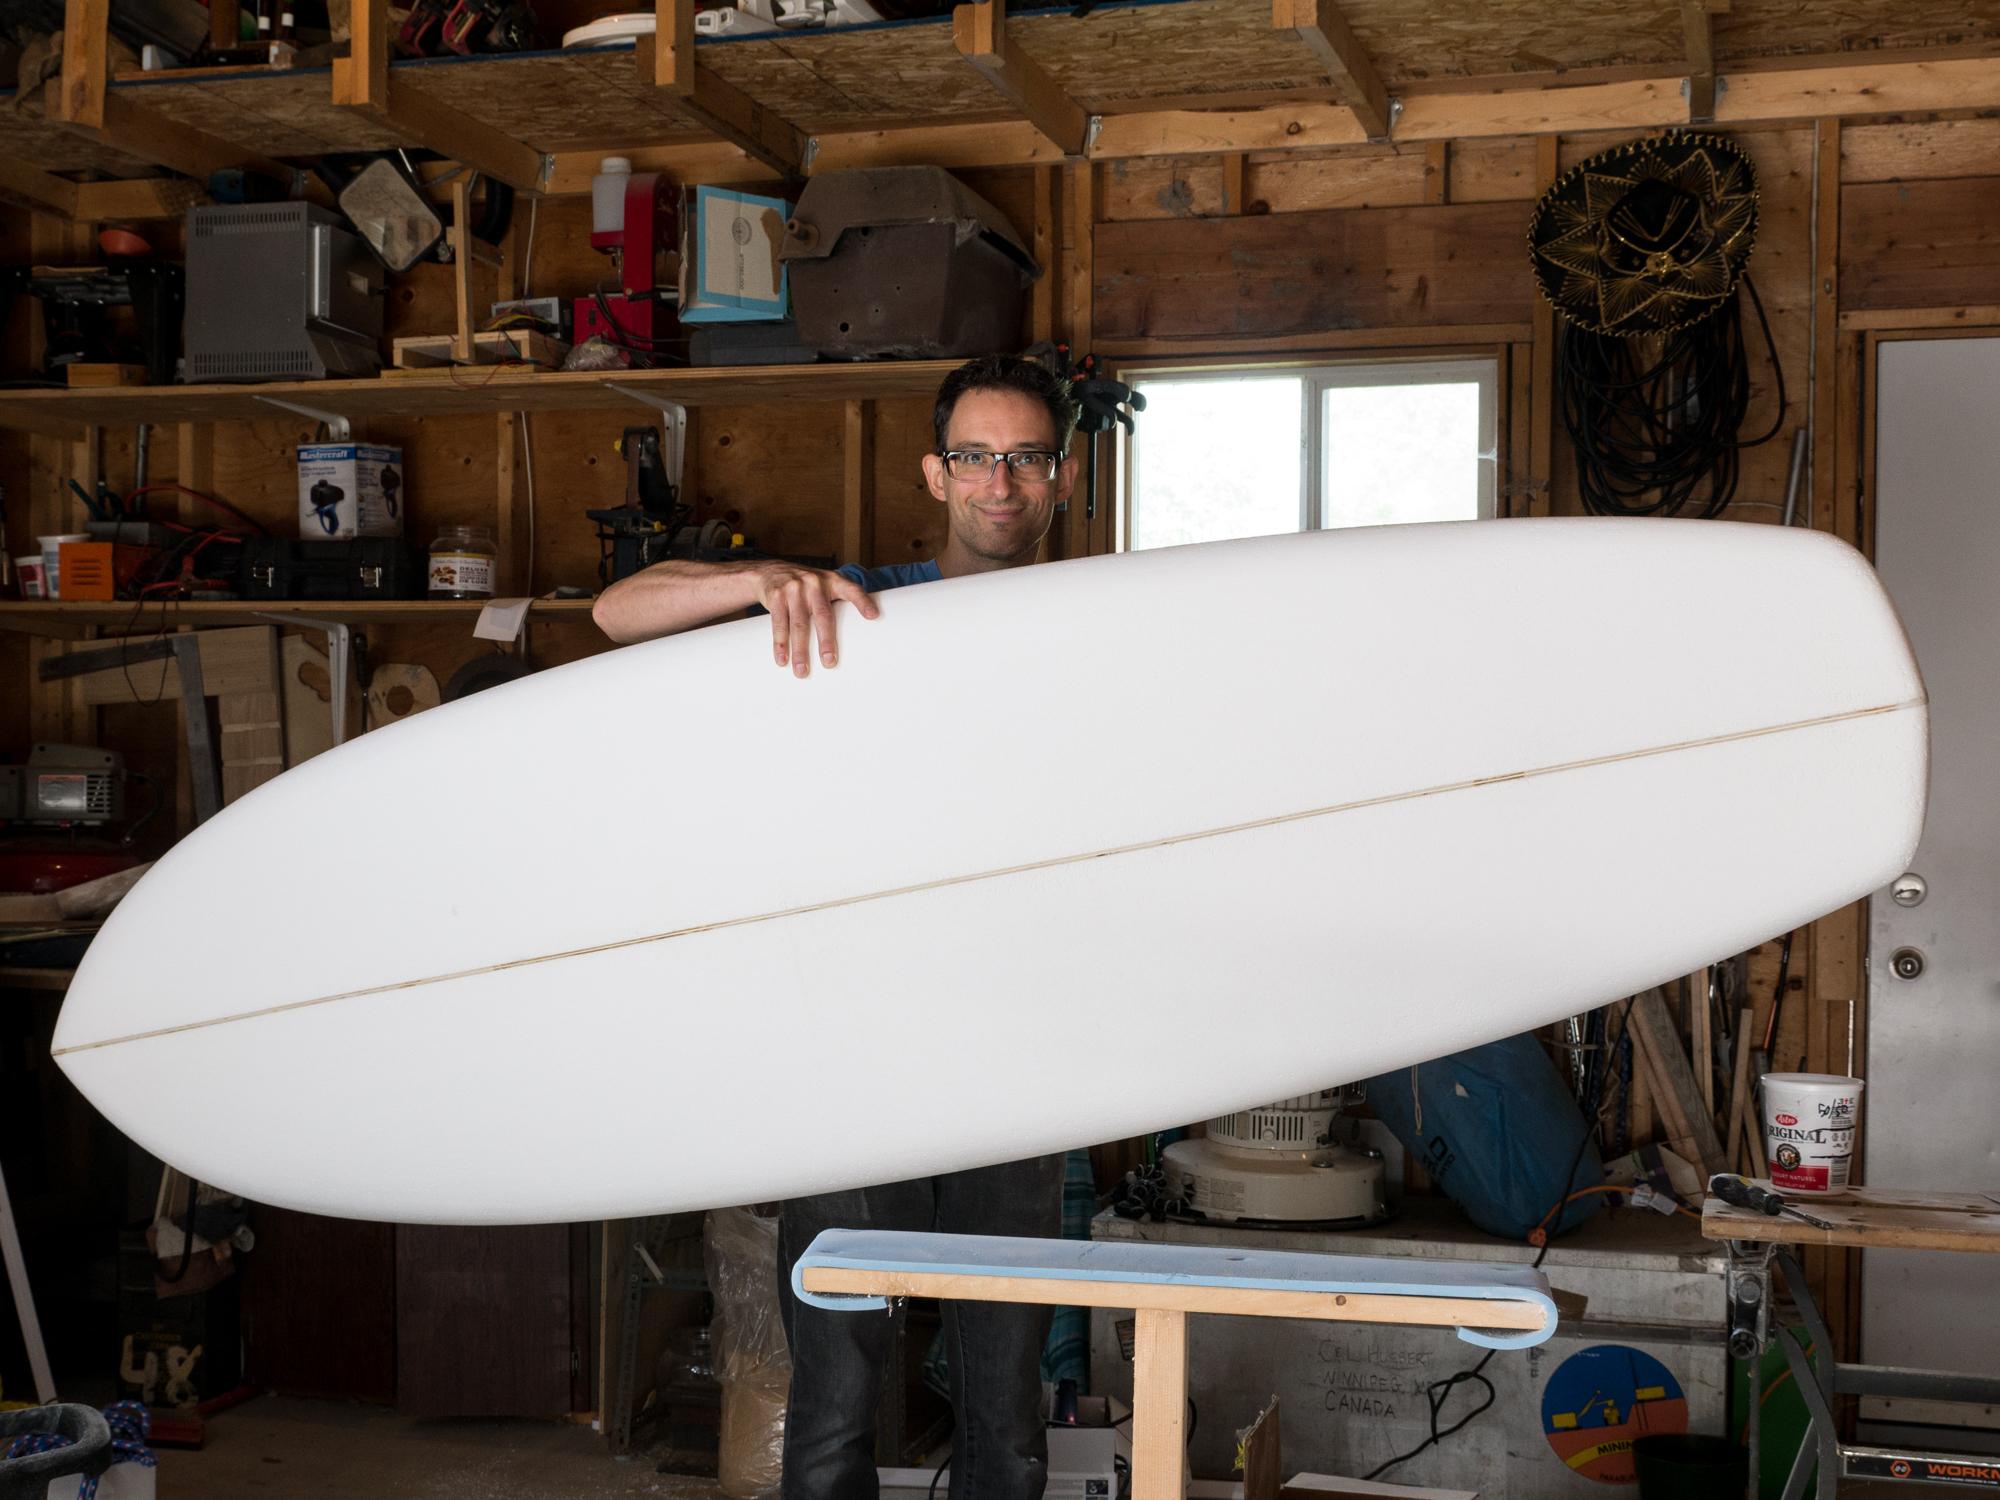 Surfboard1 (18 of 113).jpg